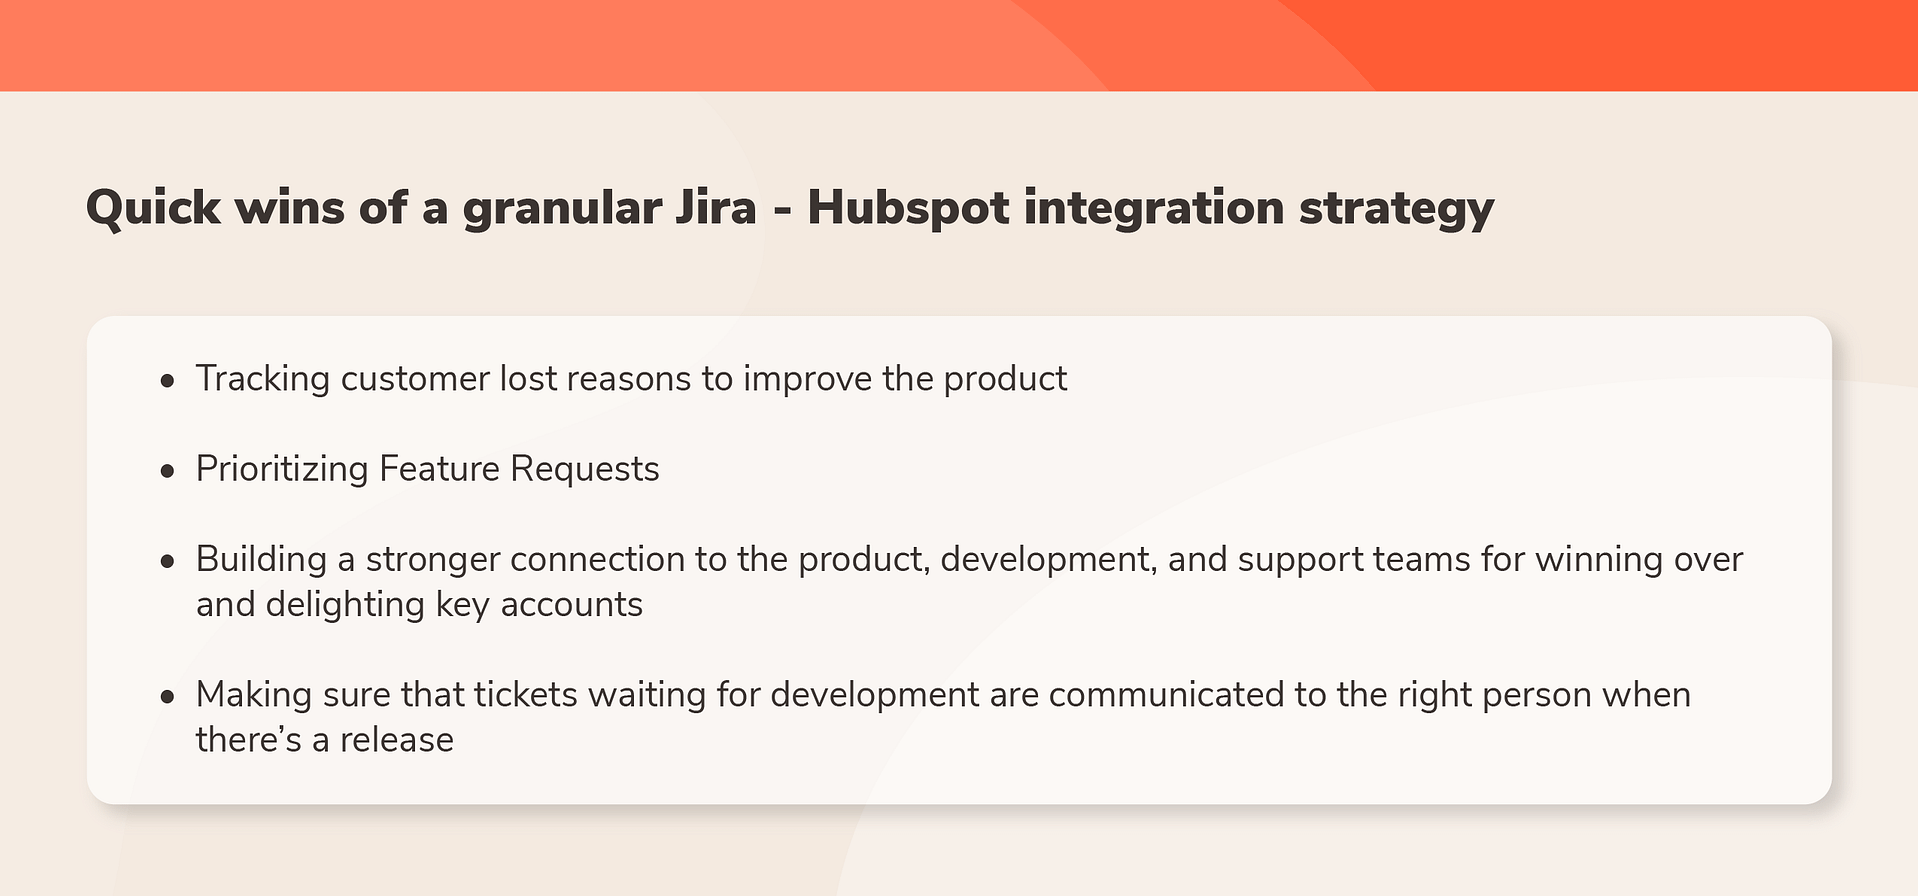 List of quick wins in a Jira-HubSpot integration strategy